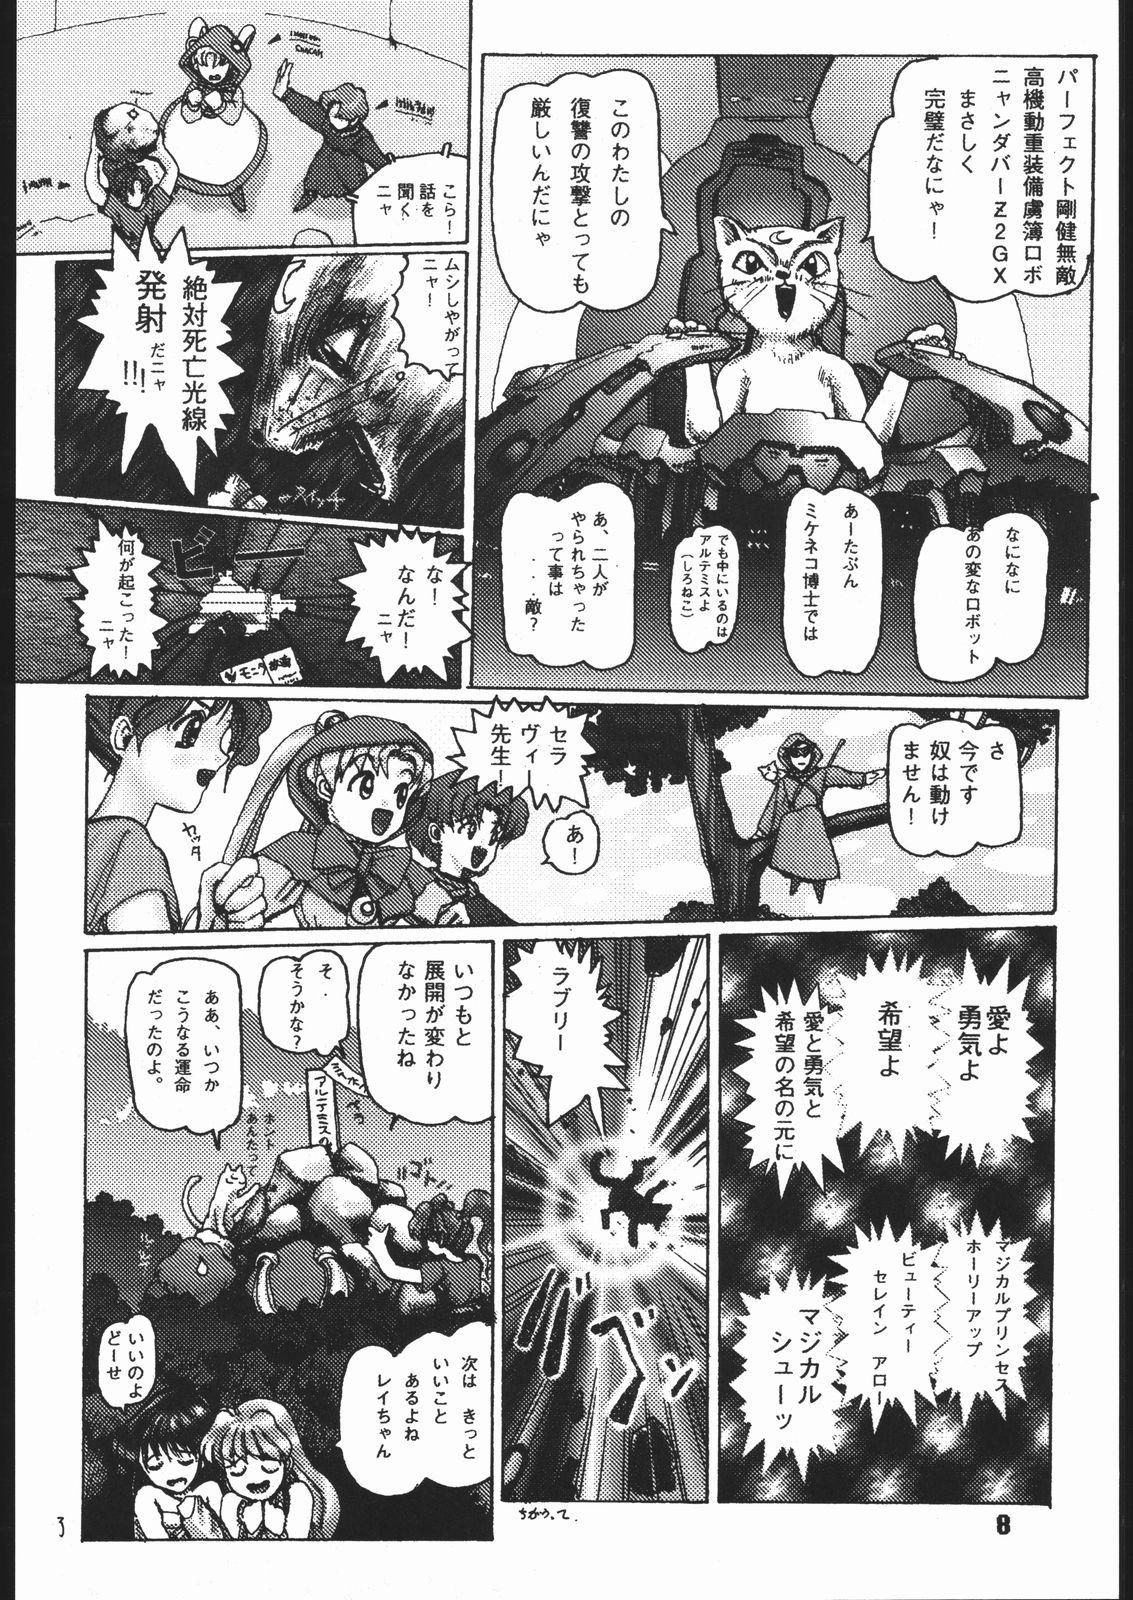 From miracle romance 3 - Sailor moon Tenchi muyo Amadora - Page 9